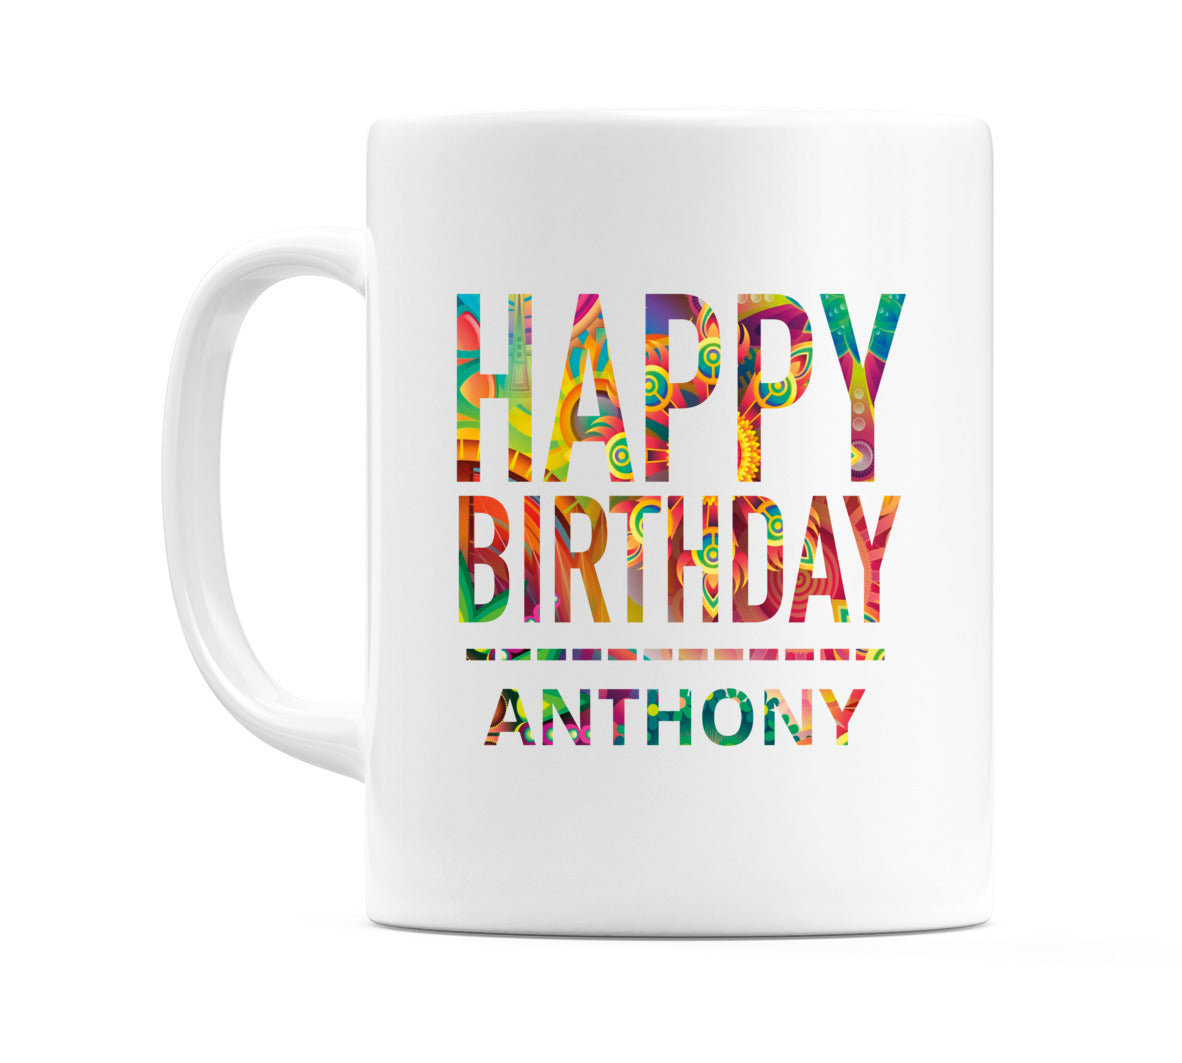 Happy Birthday Anthony (Tie Dye Effect) Mug Cup by WeDoMugs